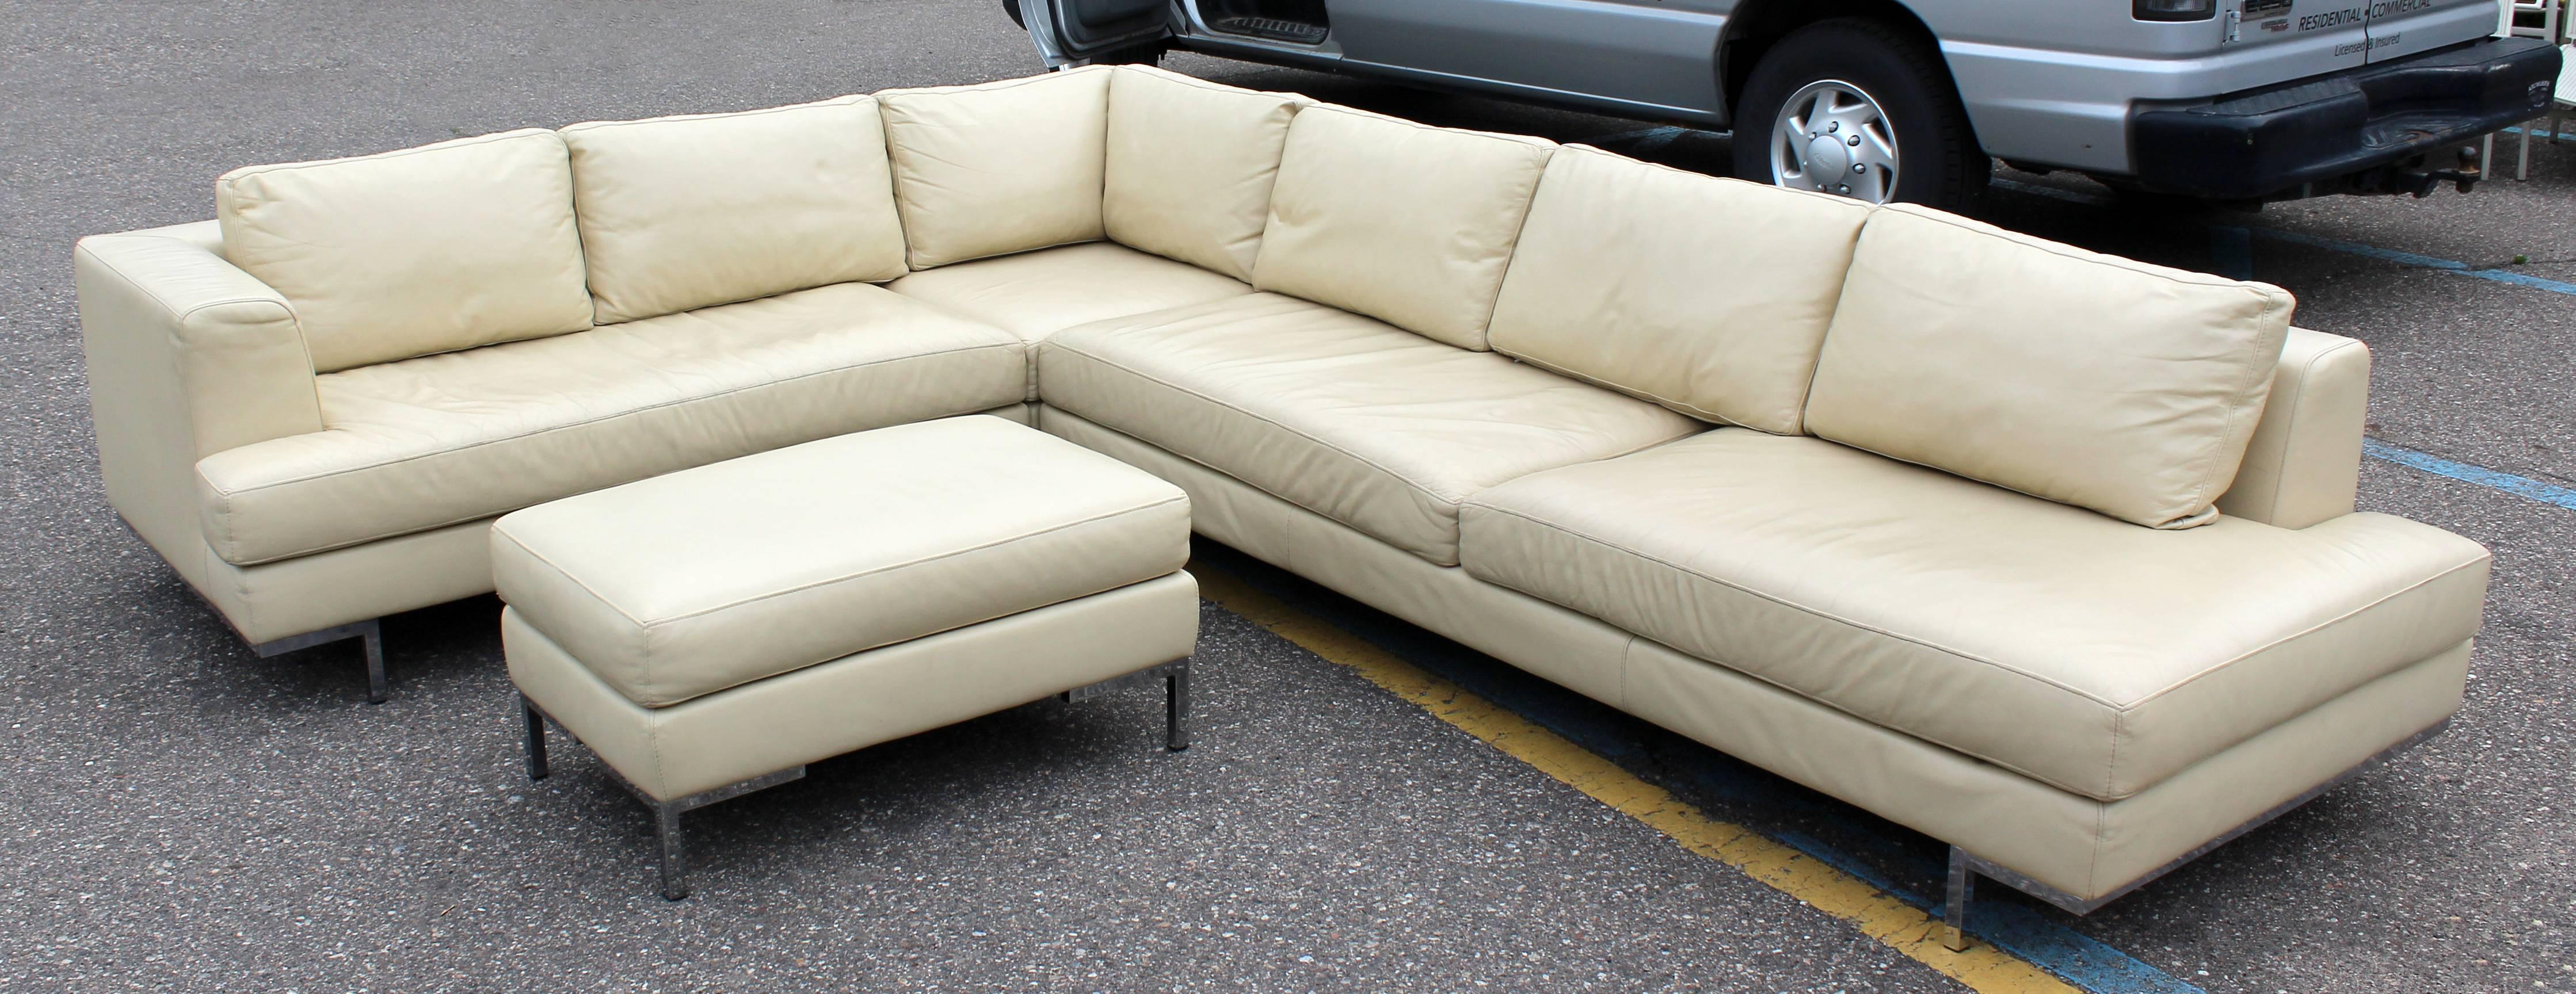 modern cream leather sectional sofa